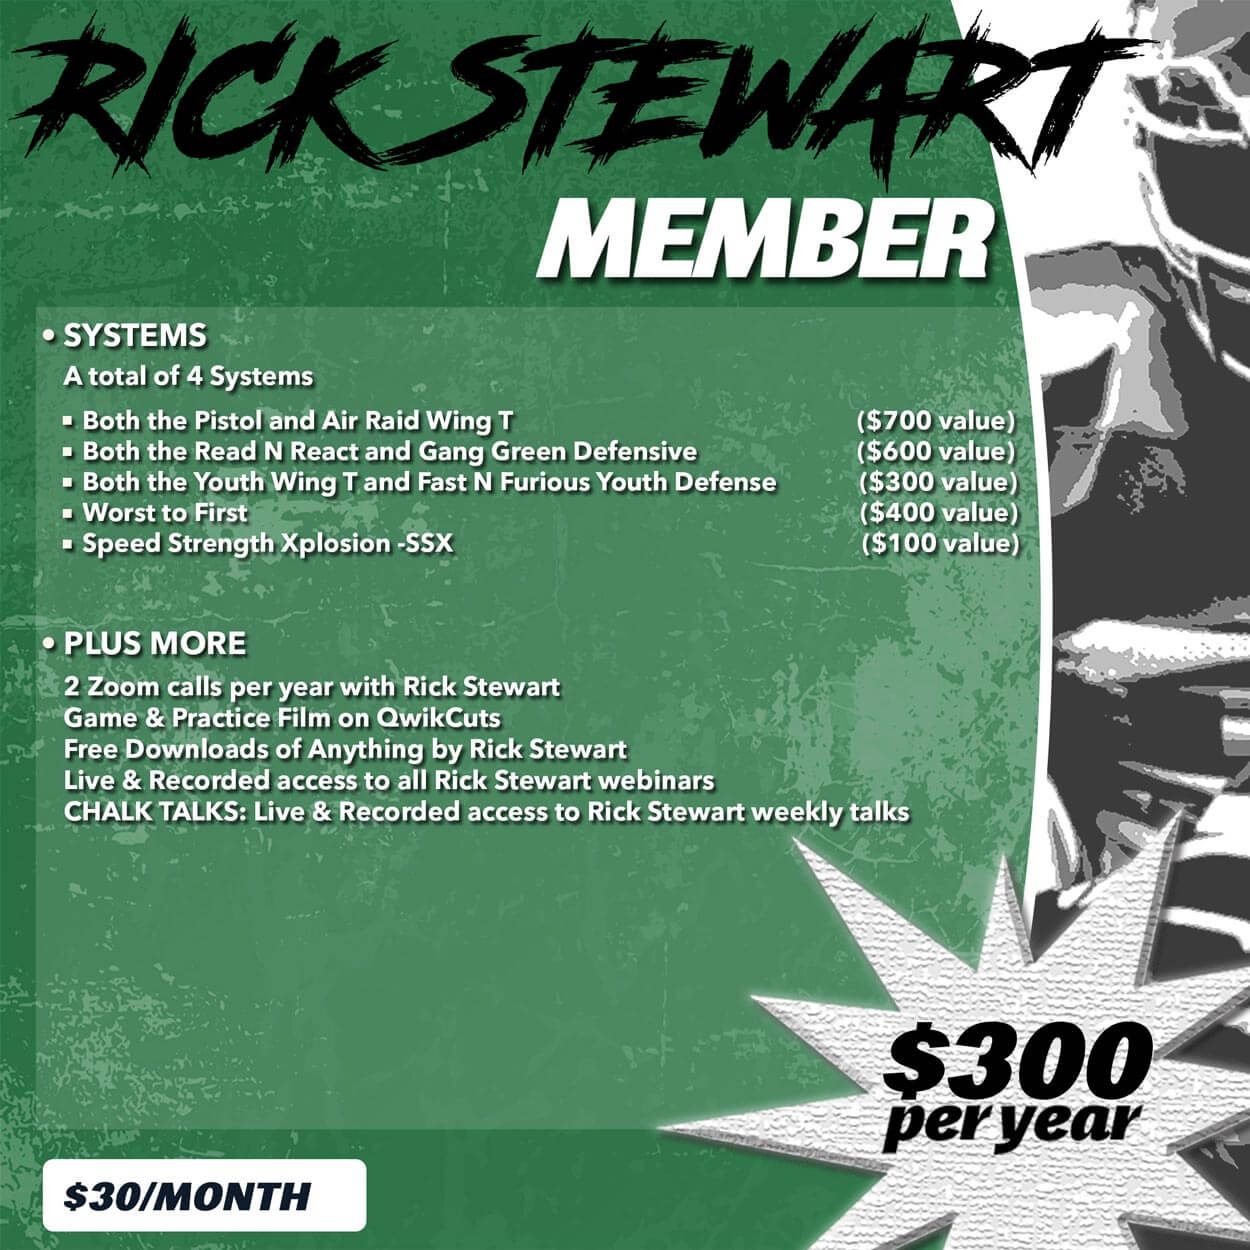 Rick Stewart Member